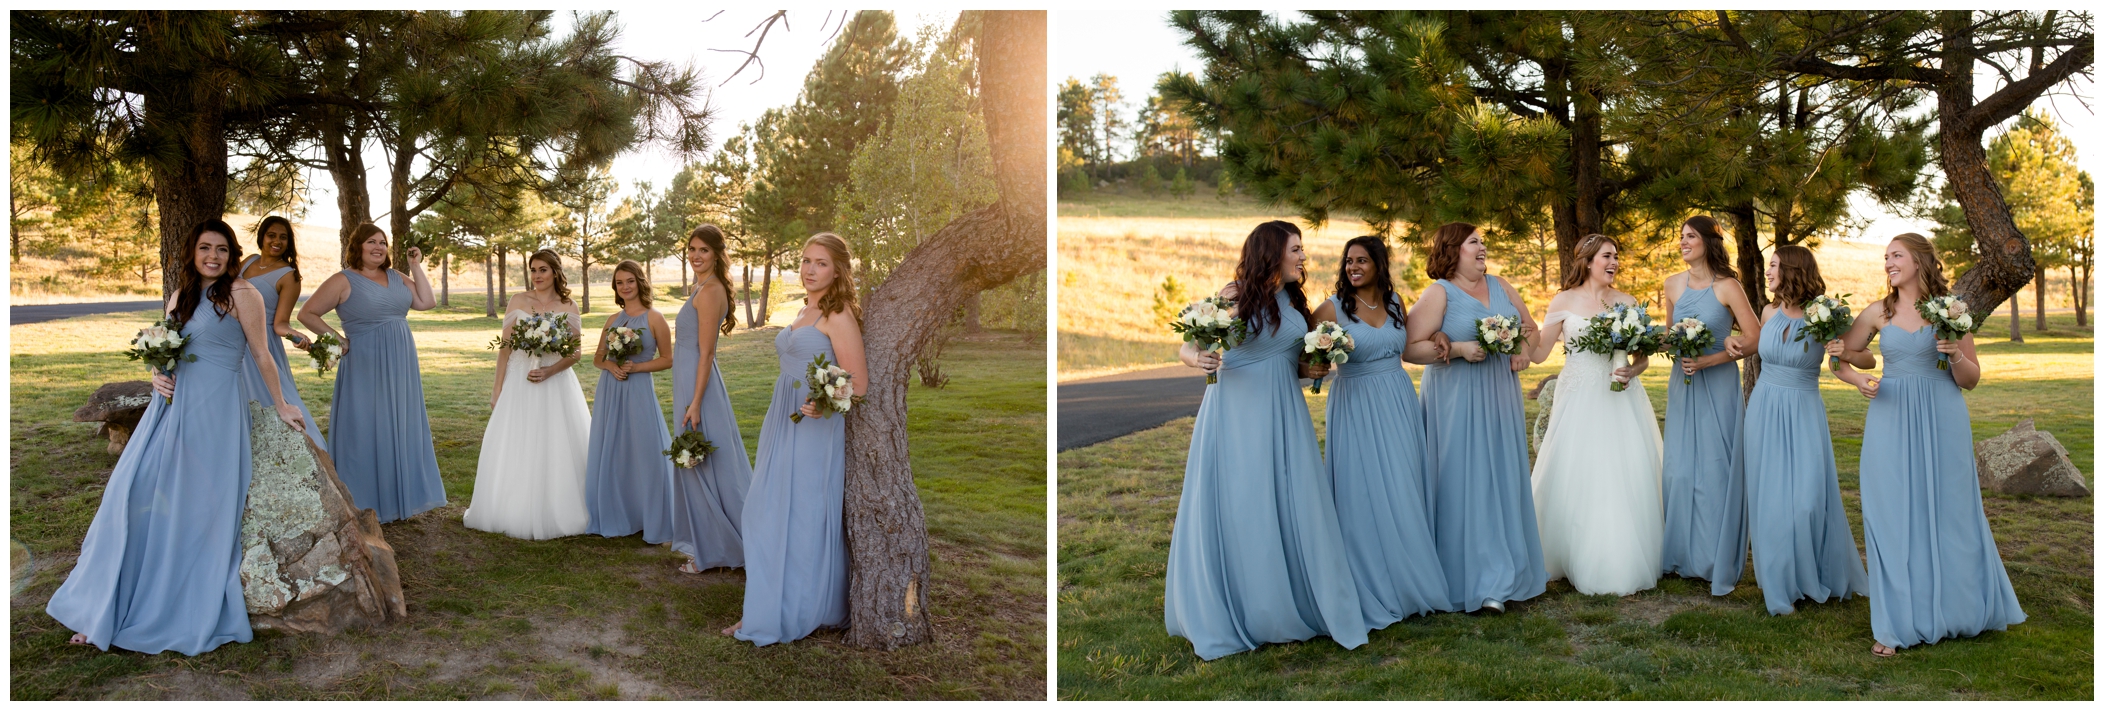 bridesmaids in long light blue dresses at Colorado mountain wedding 